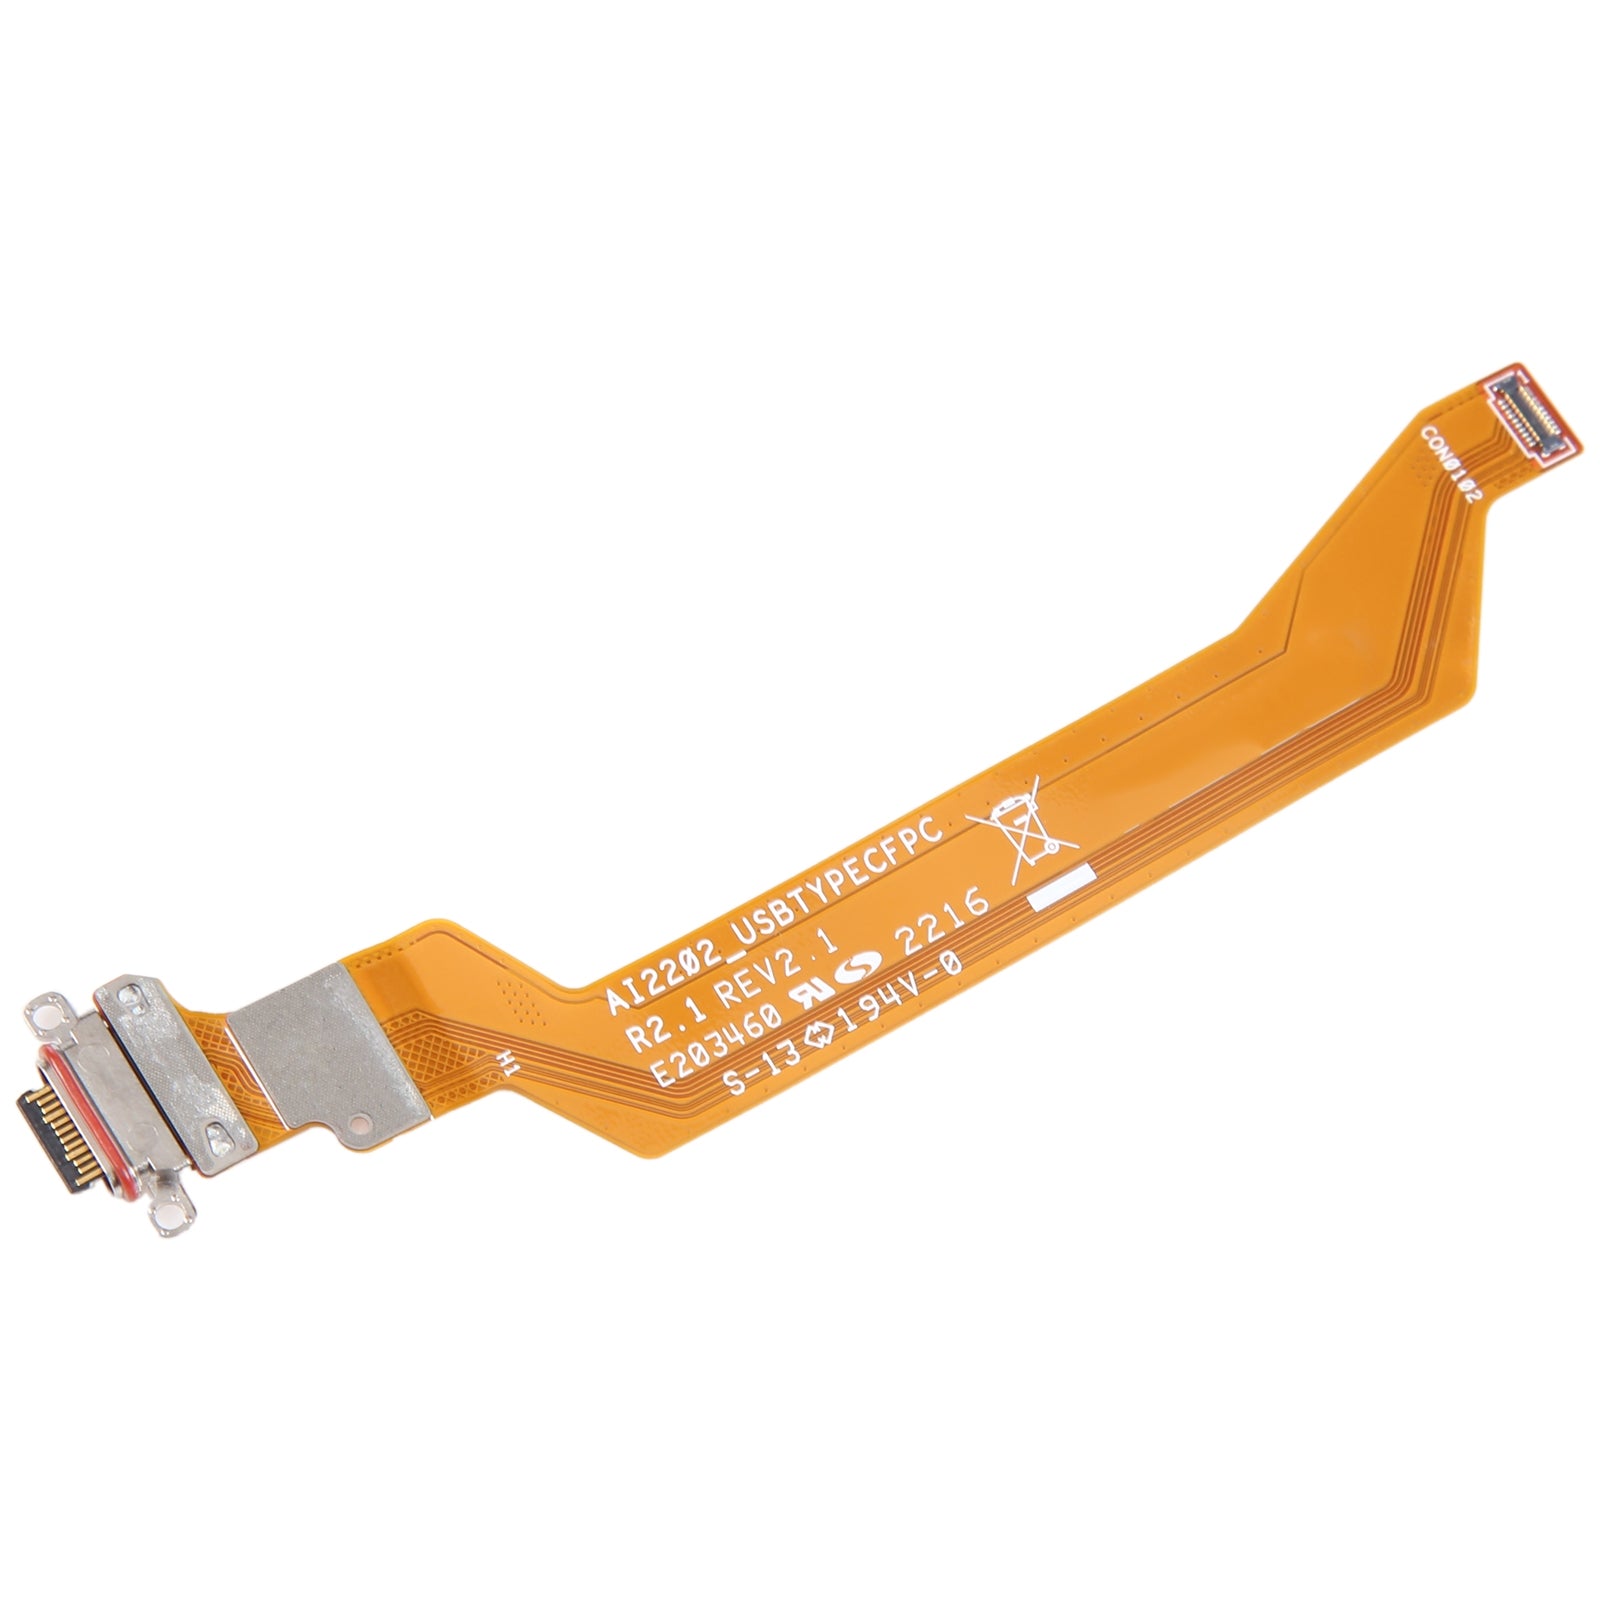 Flex Dock Carga Datos USB Asus Zenfone 9 AI2202-1A006EU